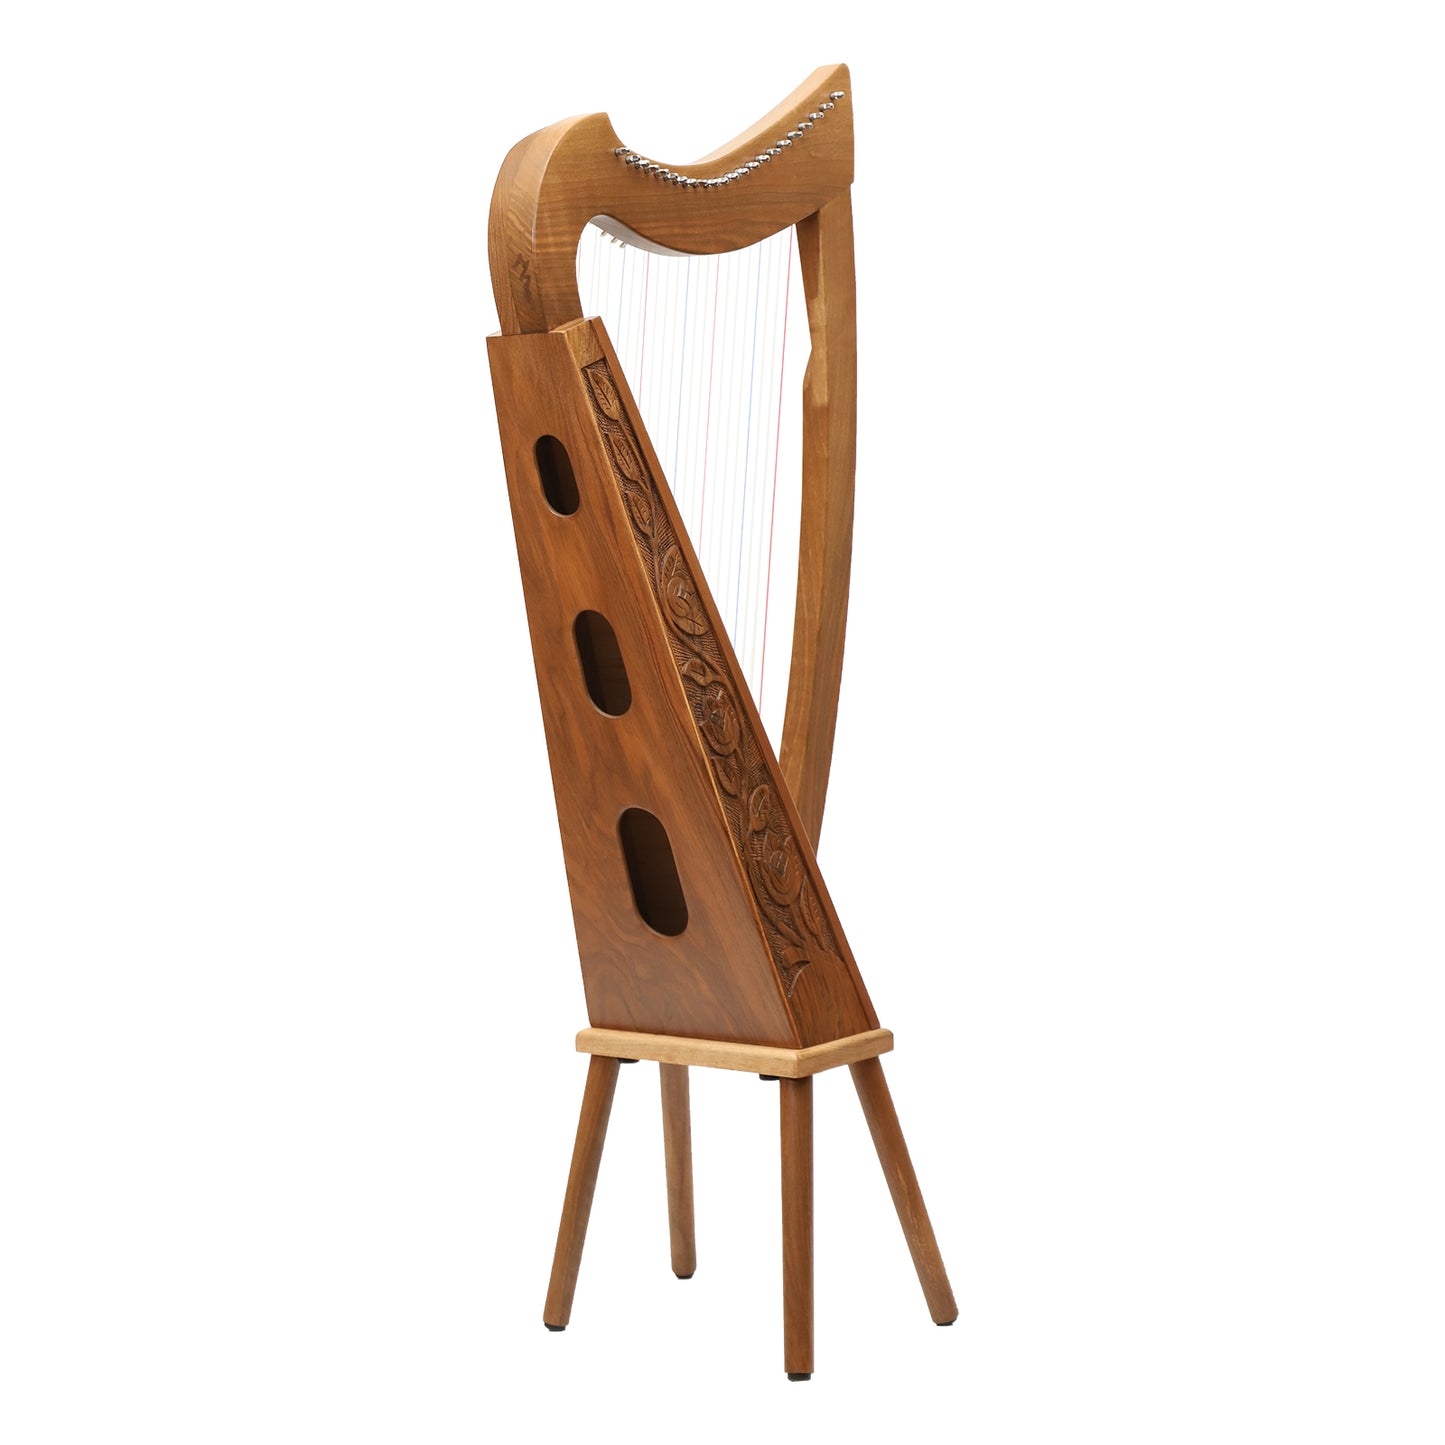 22 Strings Trinity Harp Walnut